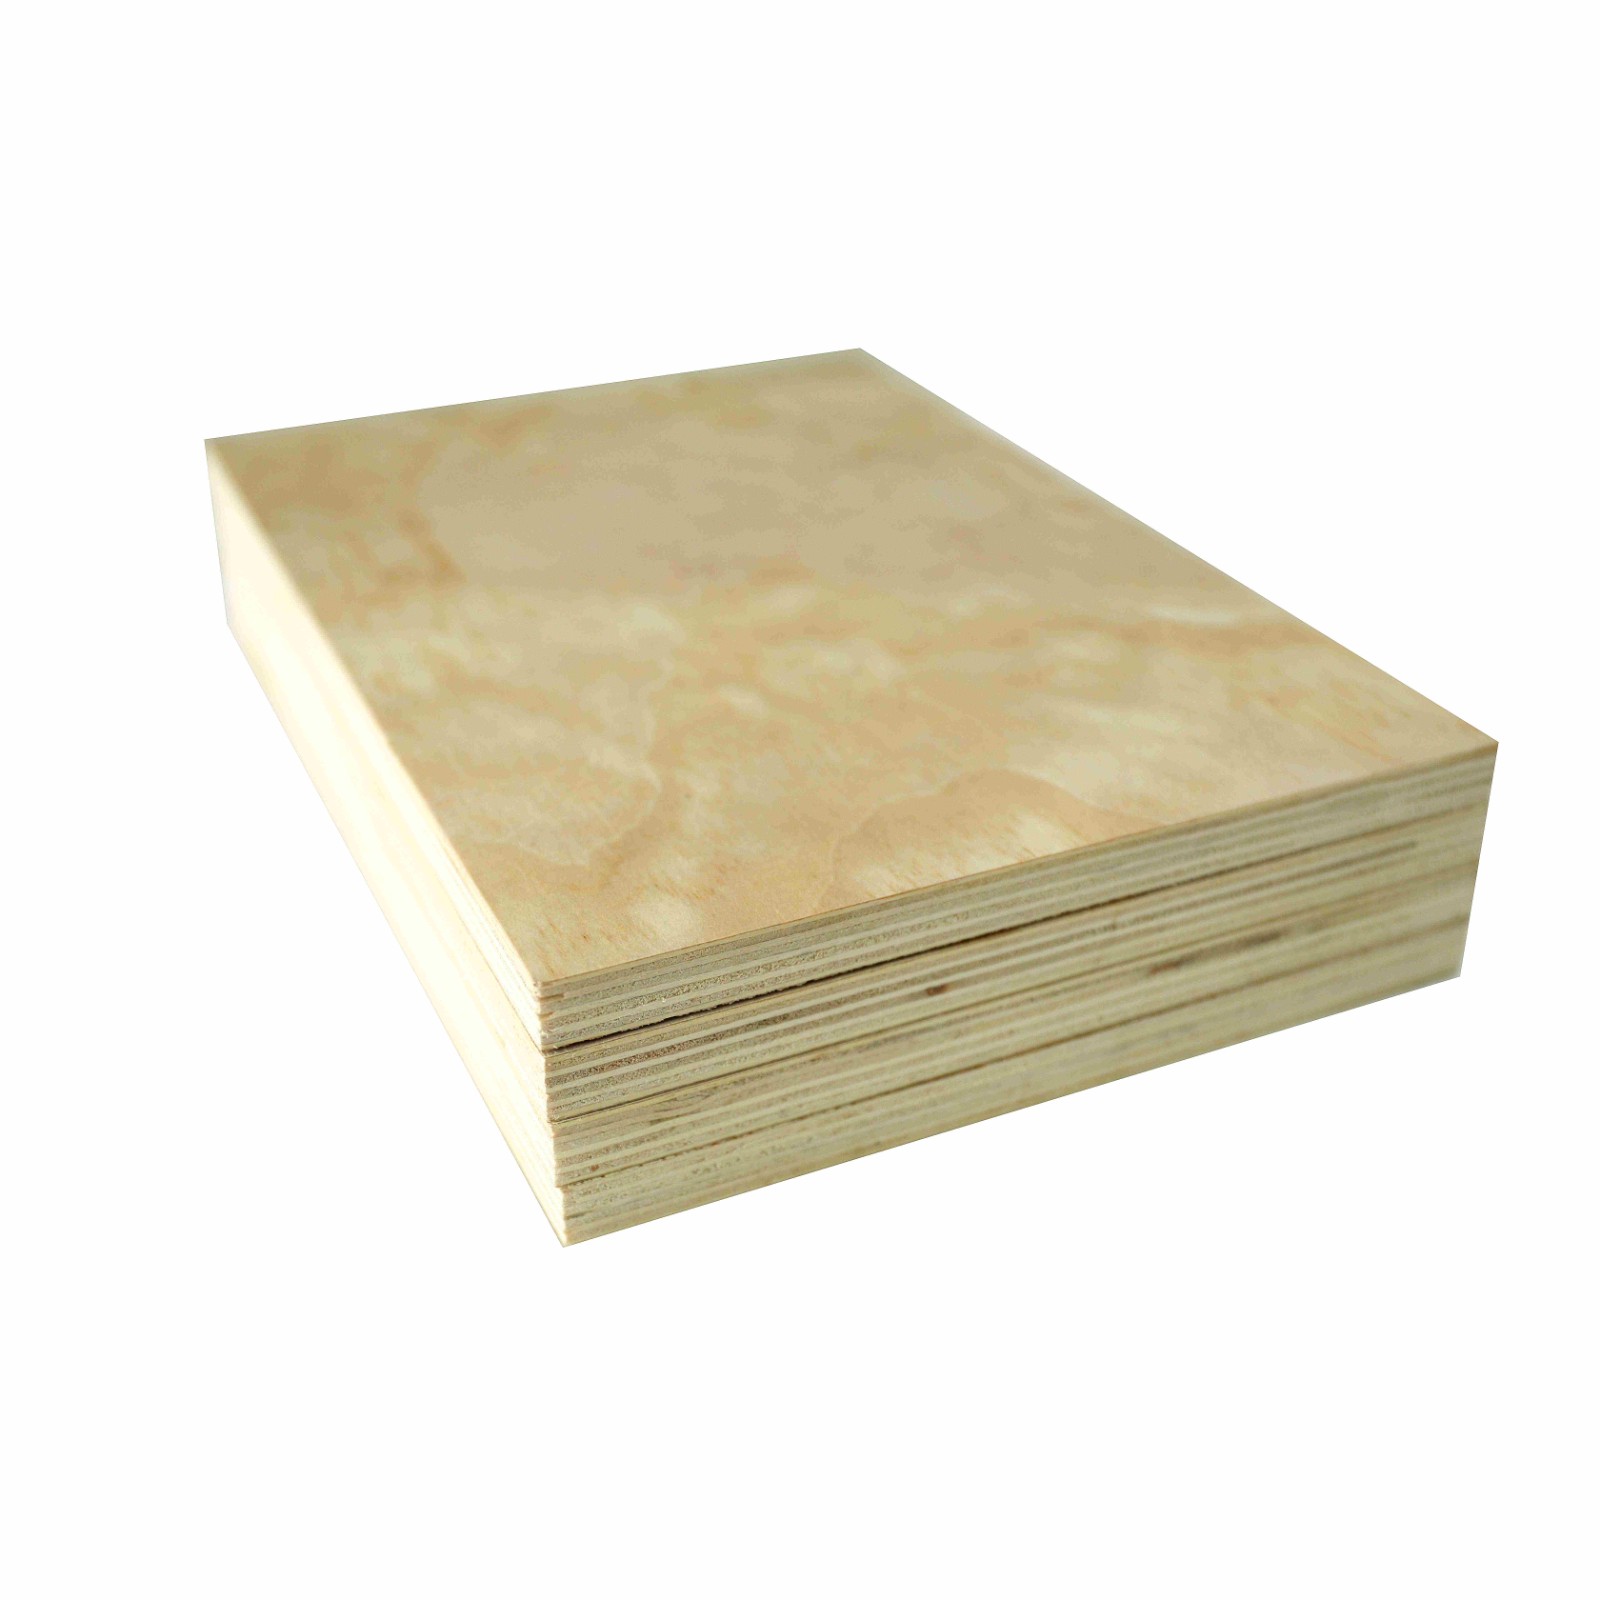 radiata pine plywood